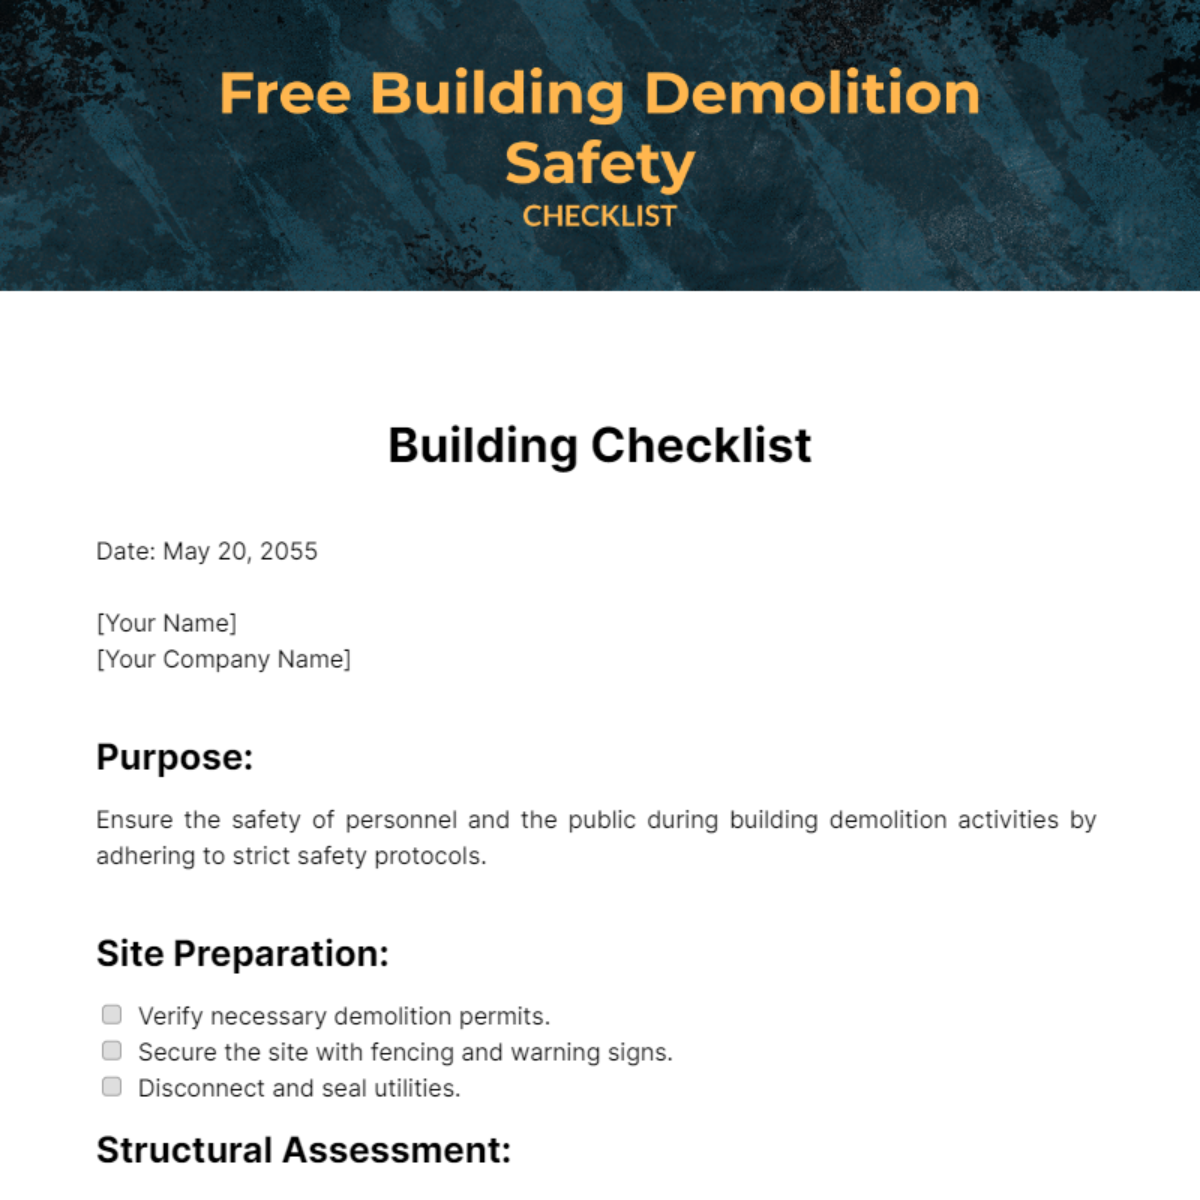 Free Building Demolition Safety Checklist Template